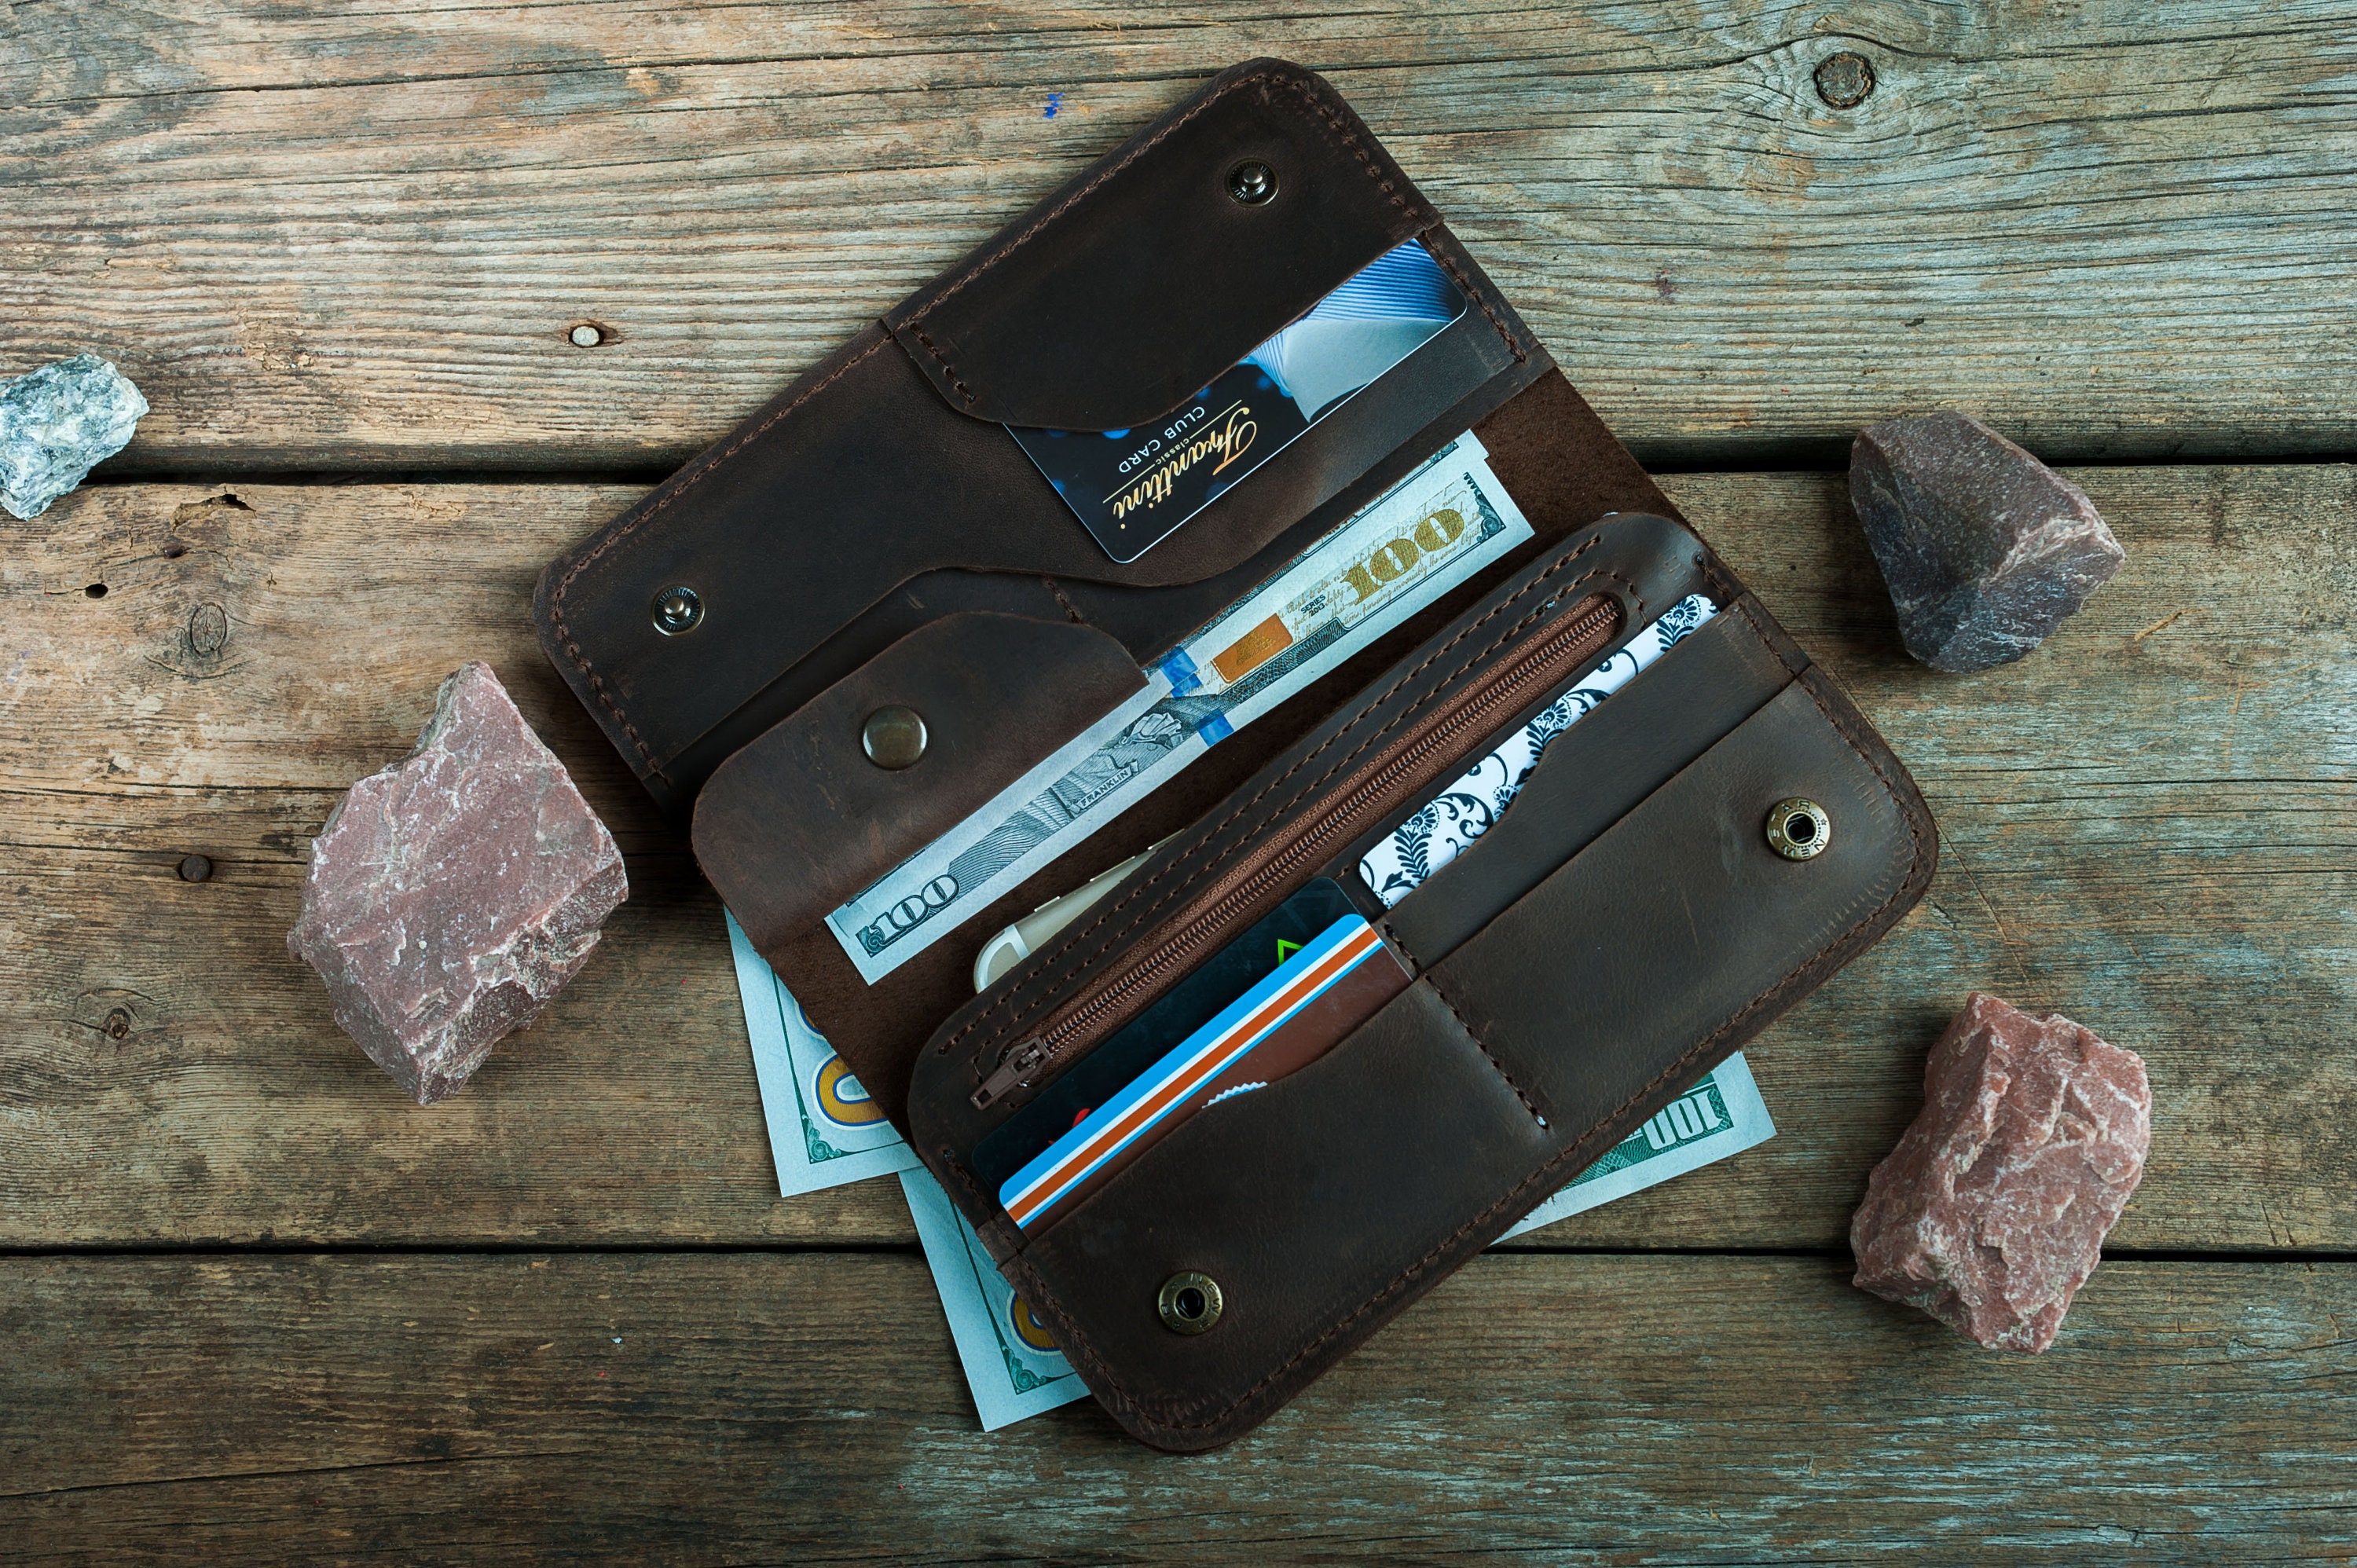 Handmade Genuine Leather Wallet Men Long Wallet Money Purse Card Holder  196-1